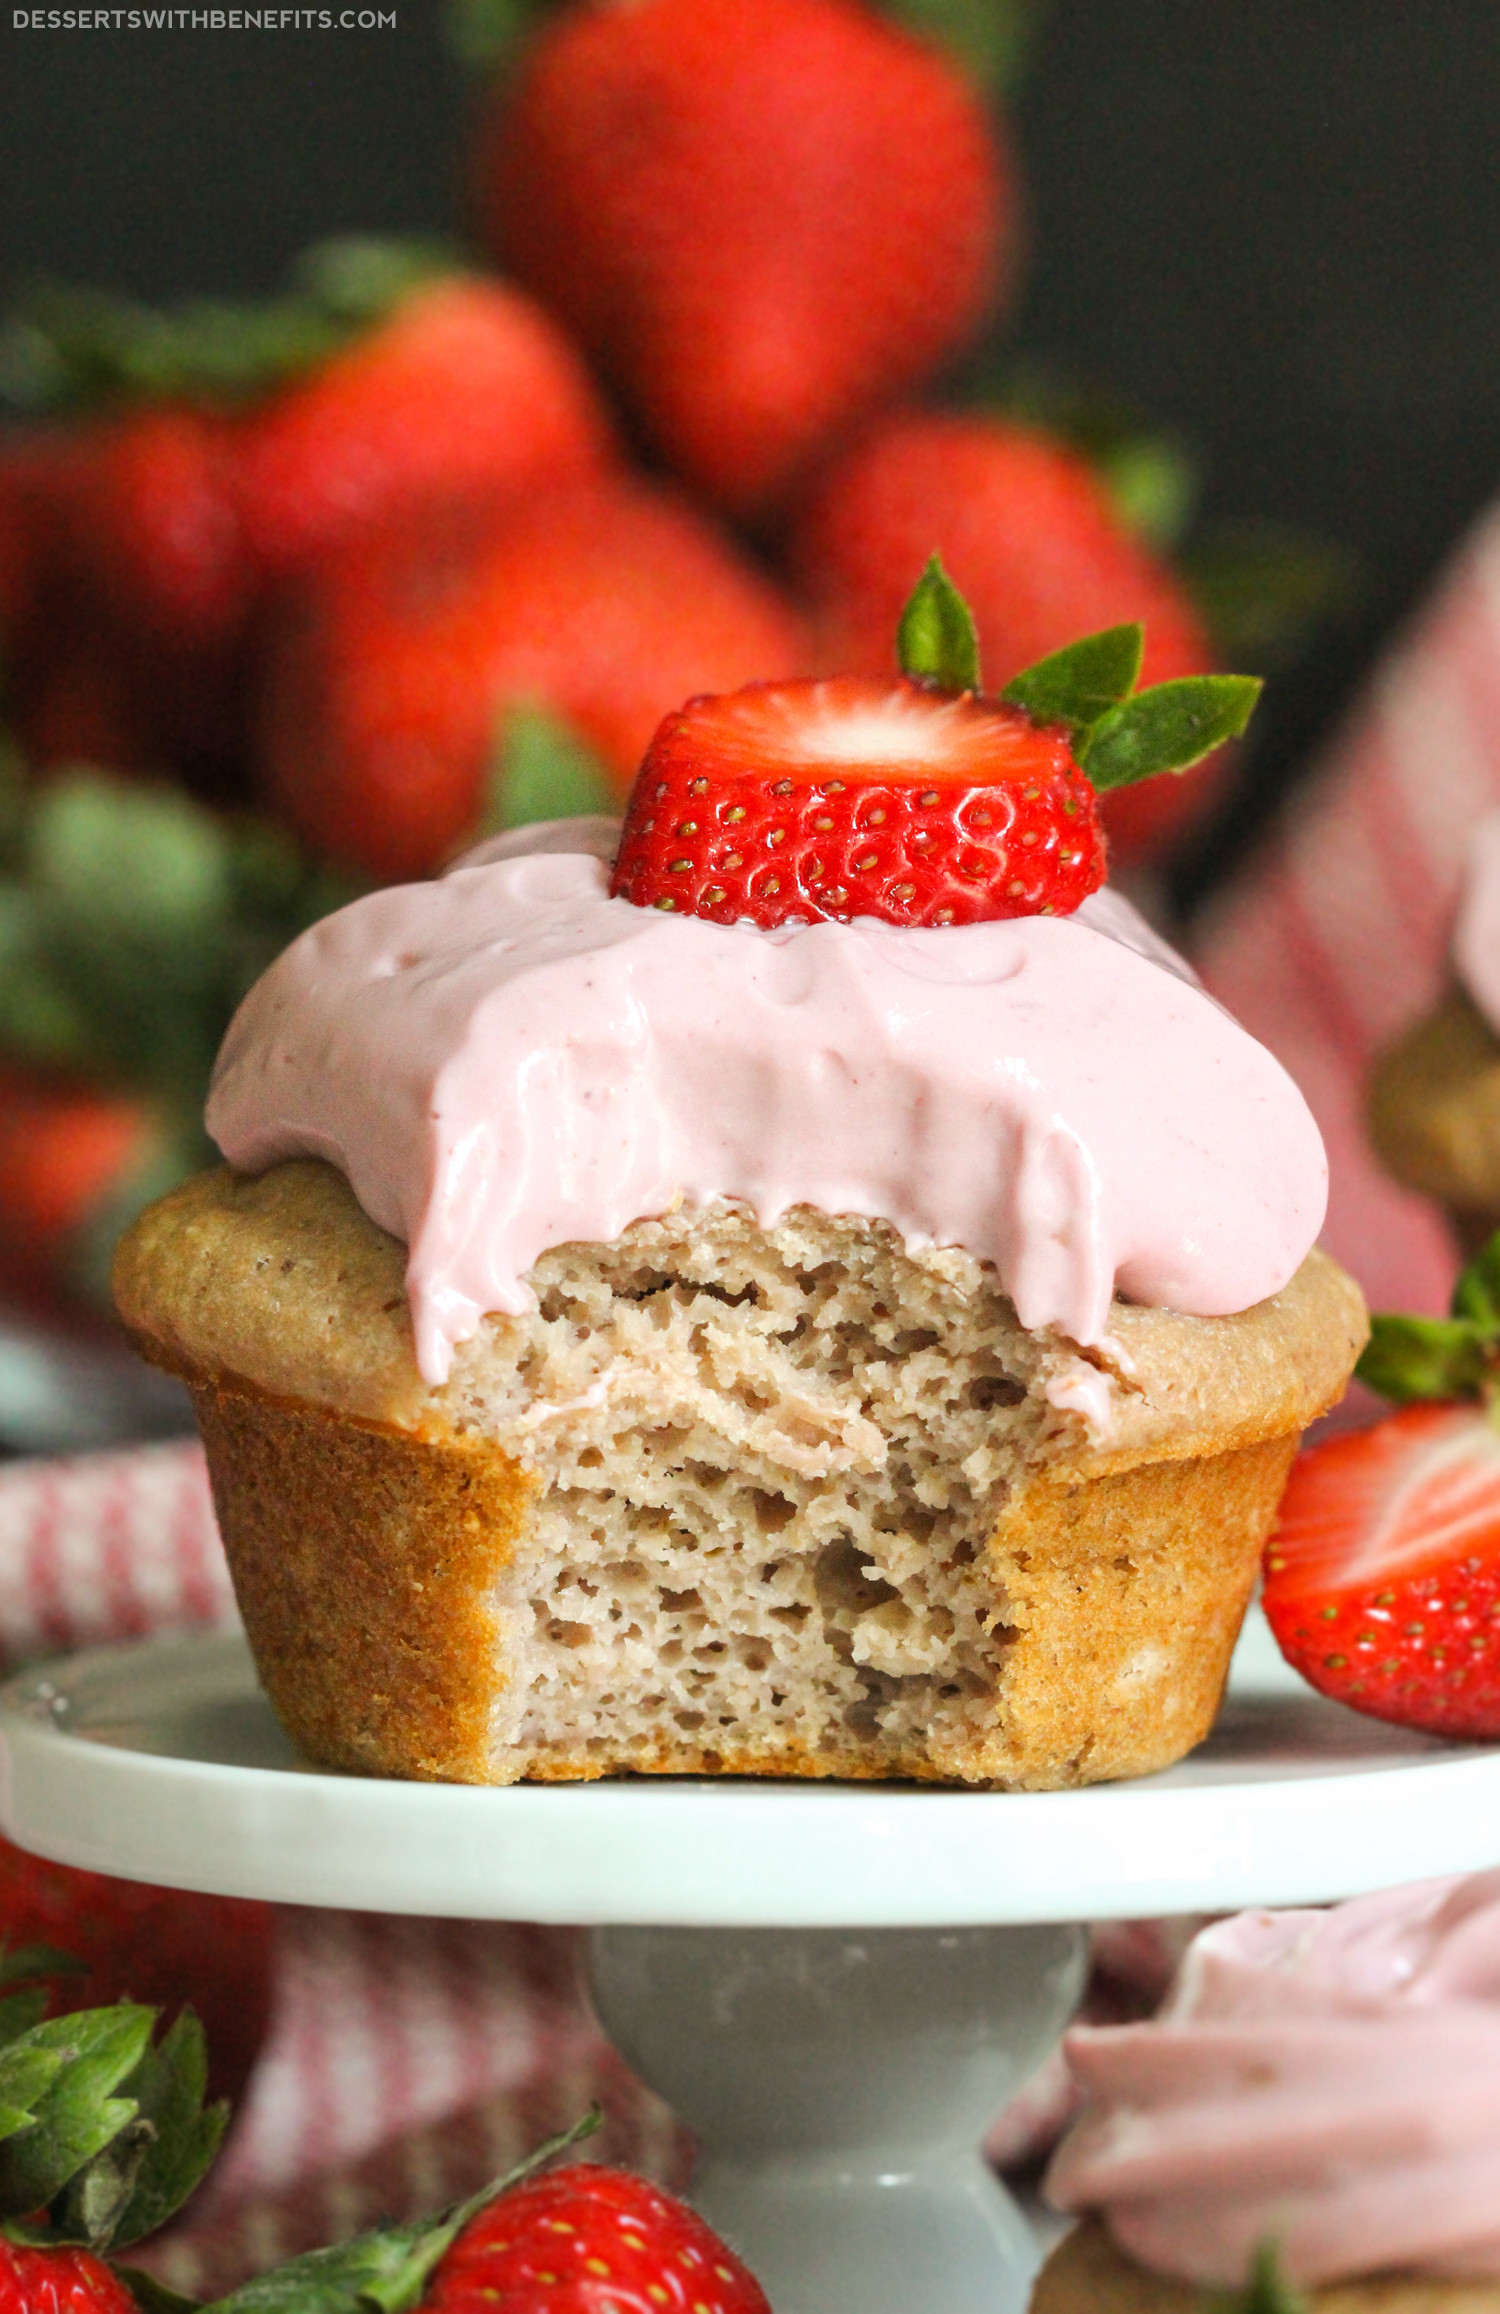 Strawberry Dessert Healthy
 Healthy Strawberry Cupcakes Recipe